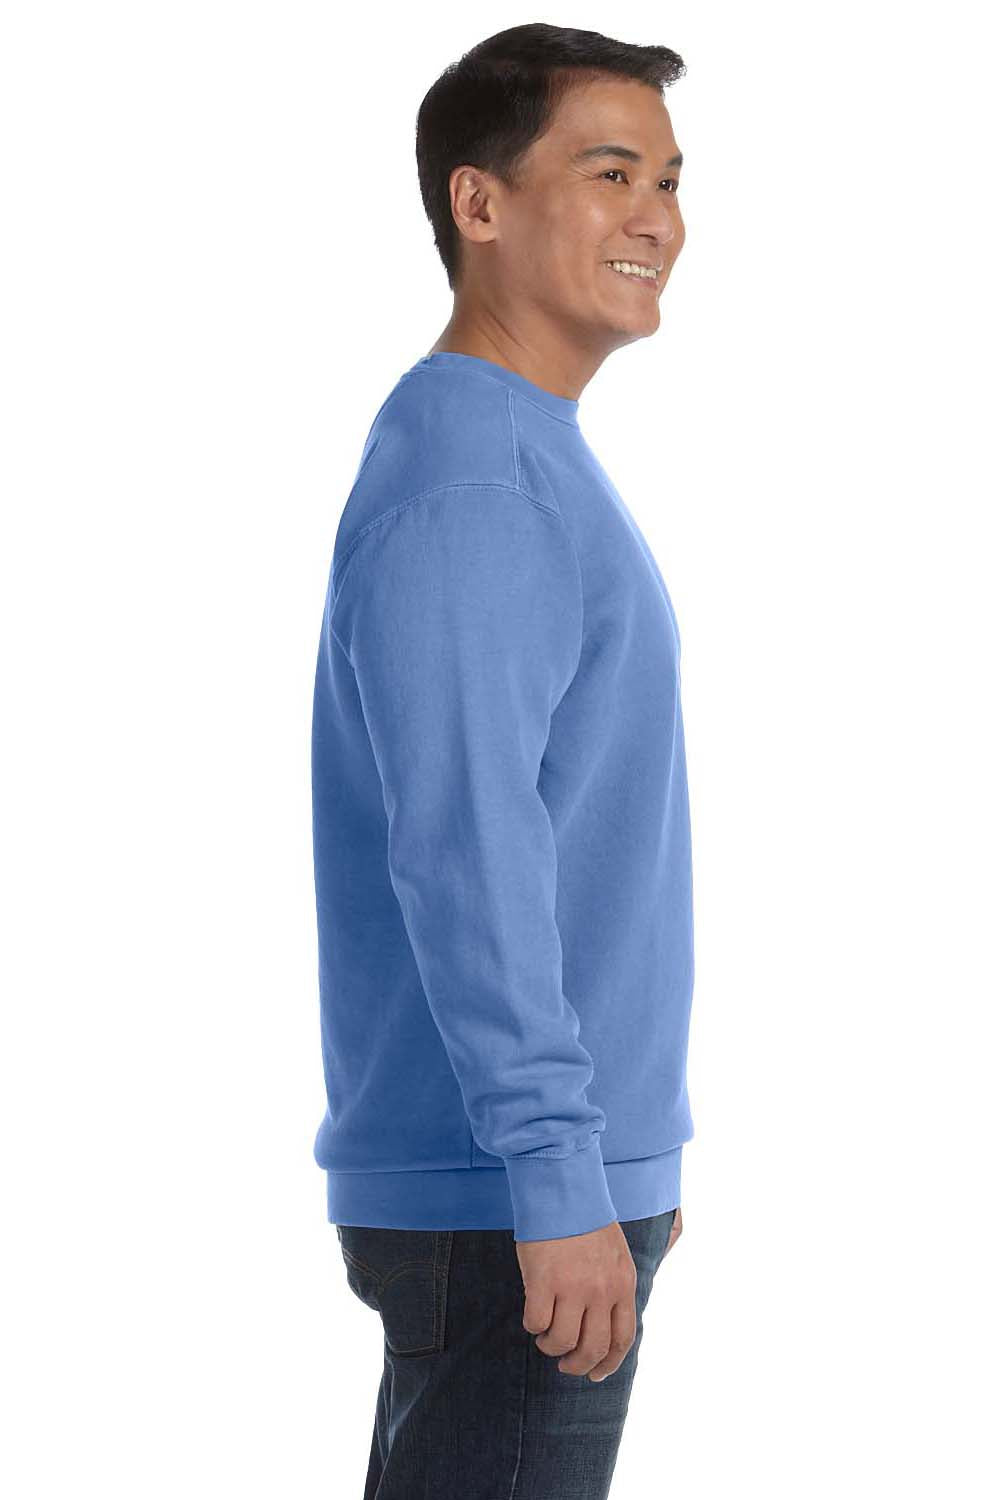 Comfort Colors 1566 Mens Crewneck Sweatshirt Flo Blue Side